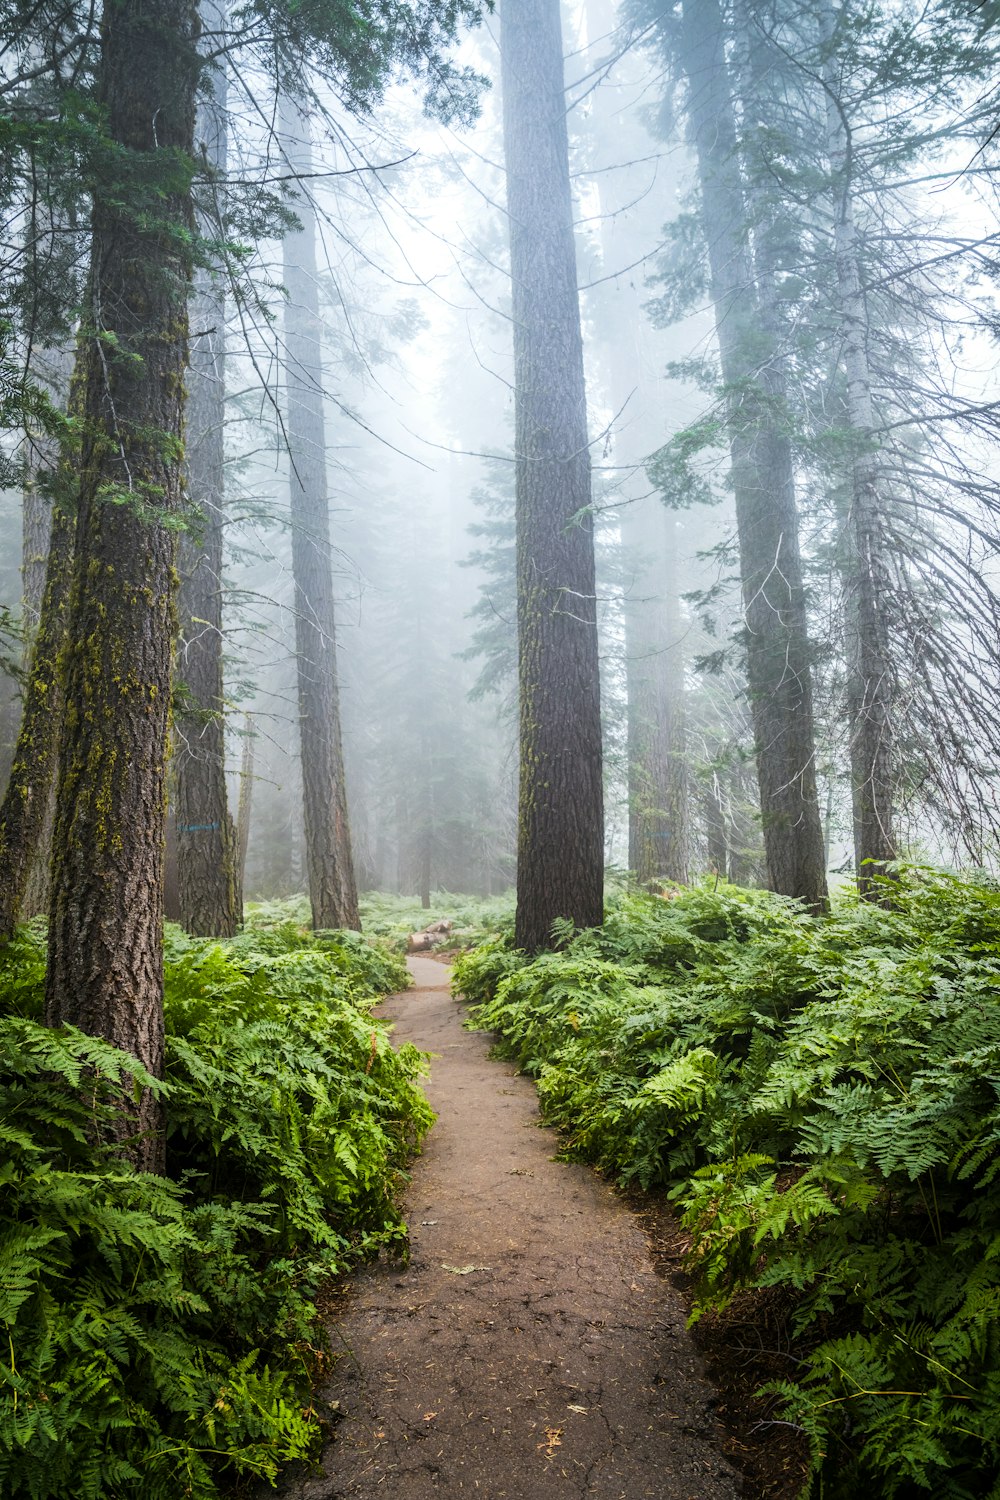 a path through a dense forest on a foggy day